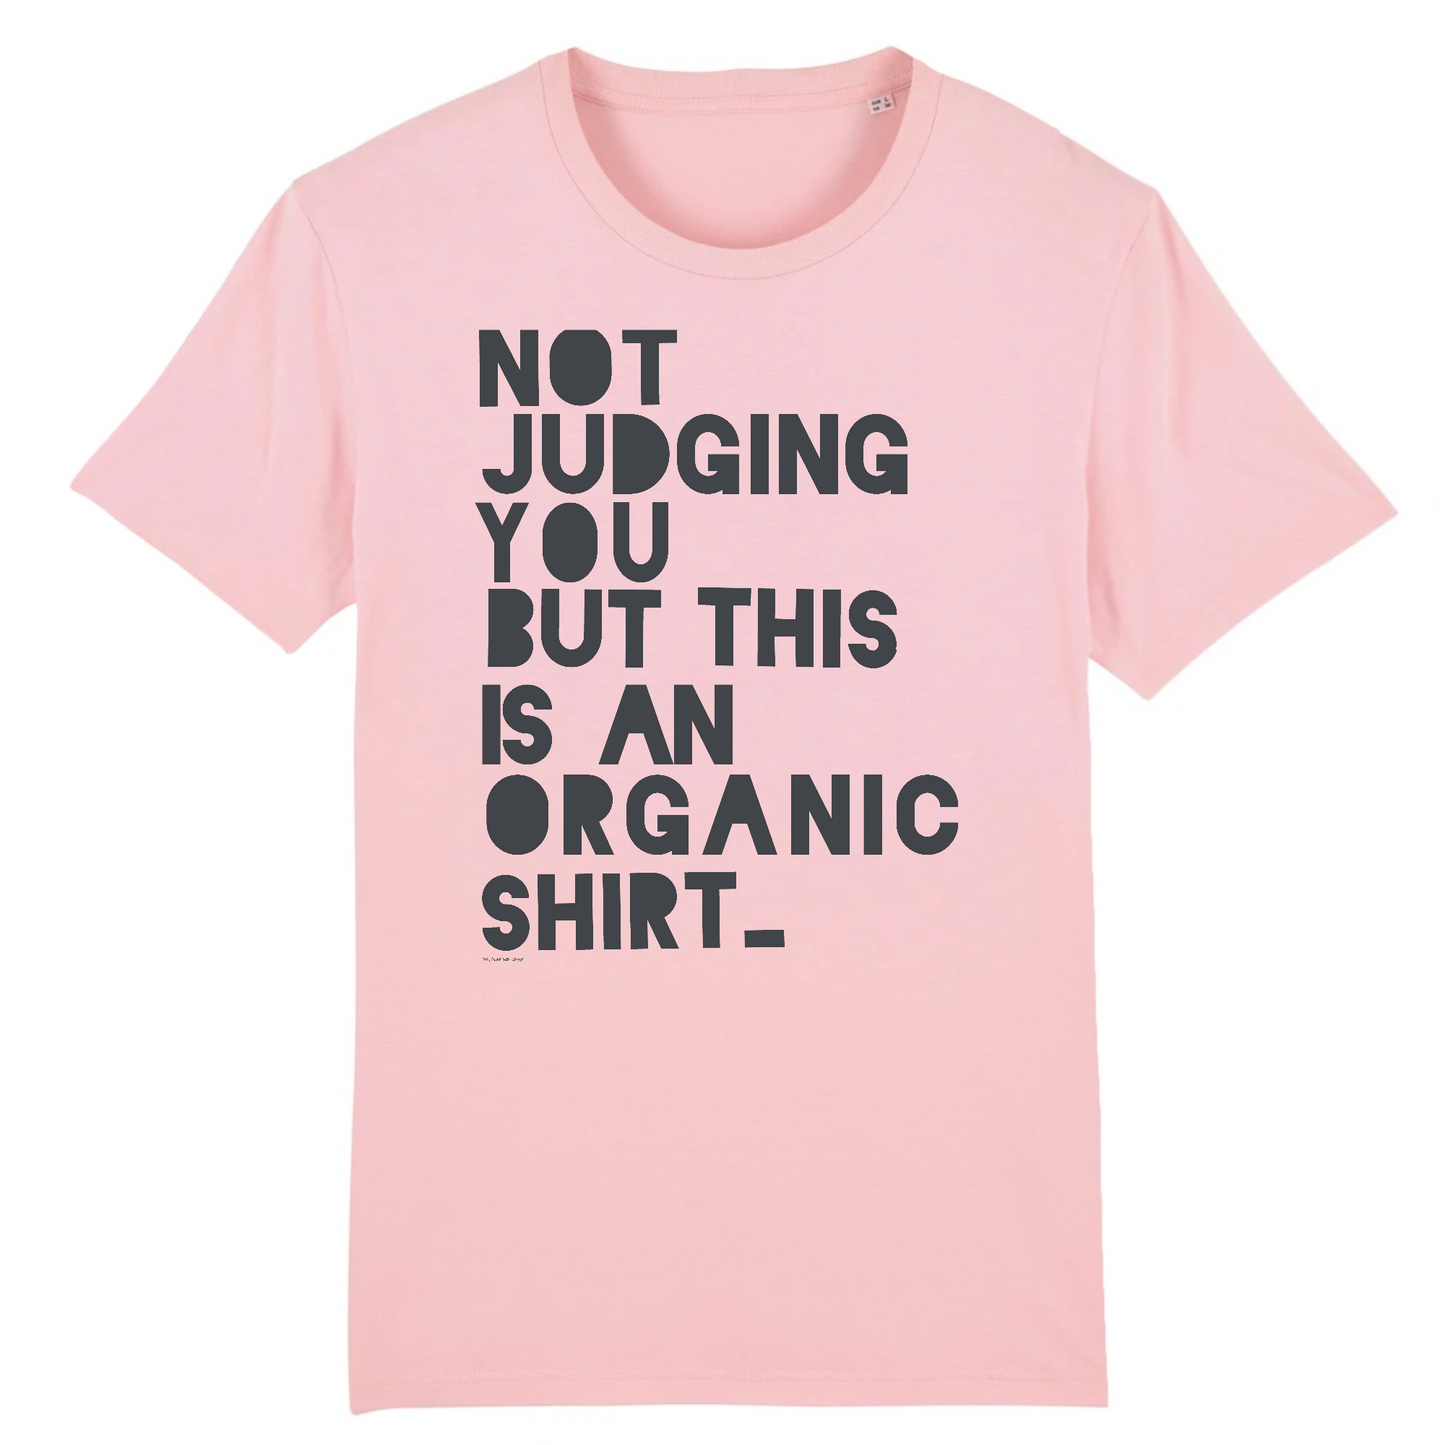 Organic pink statement shirt